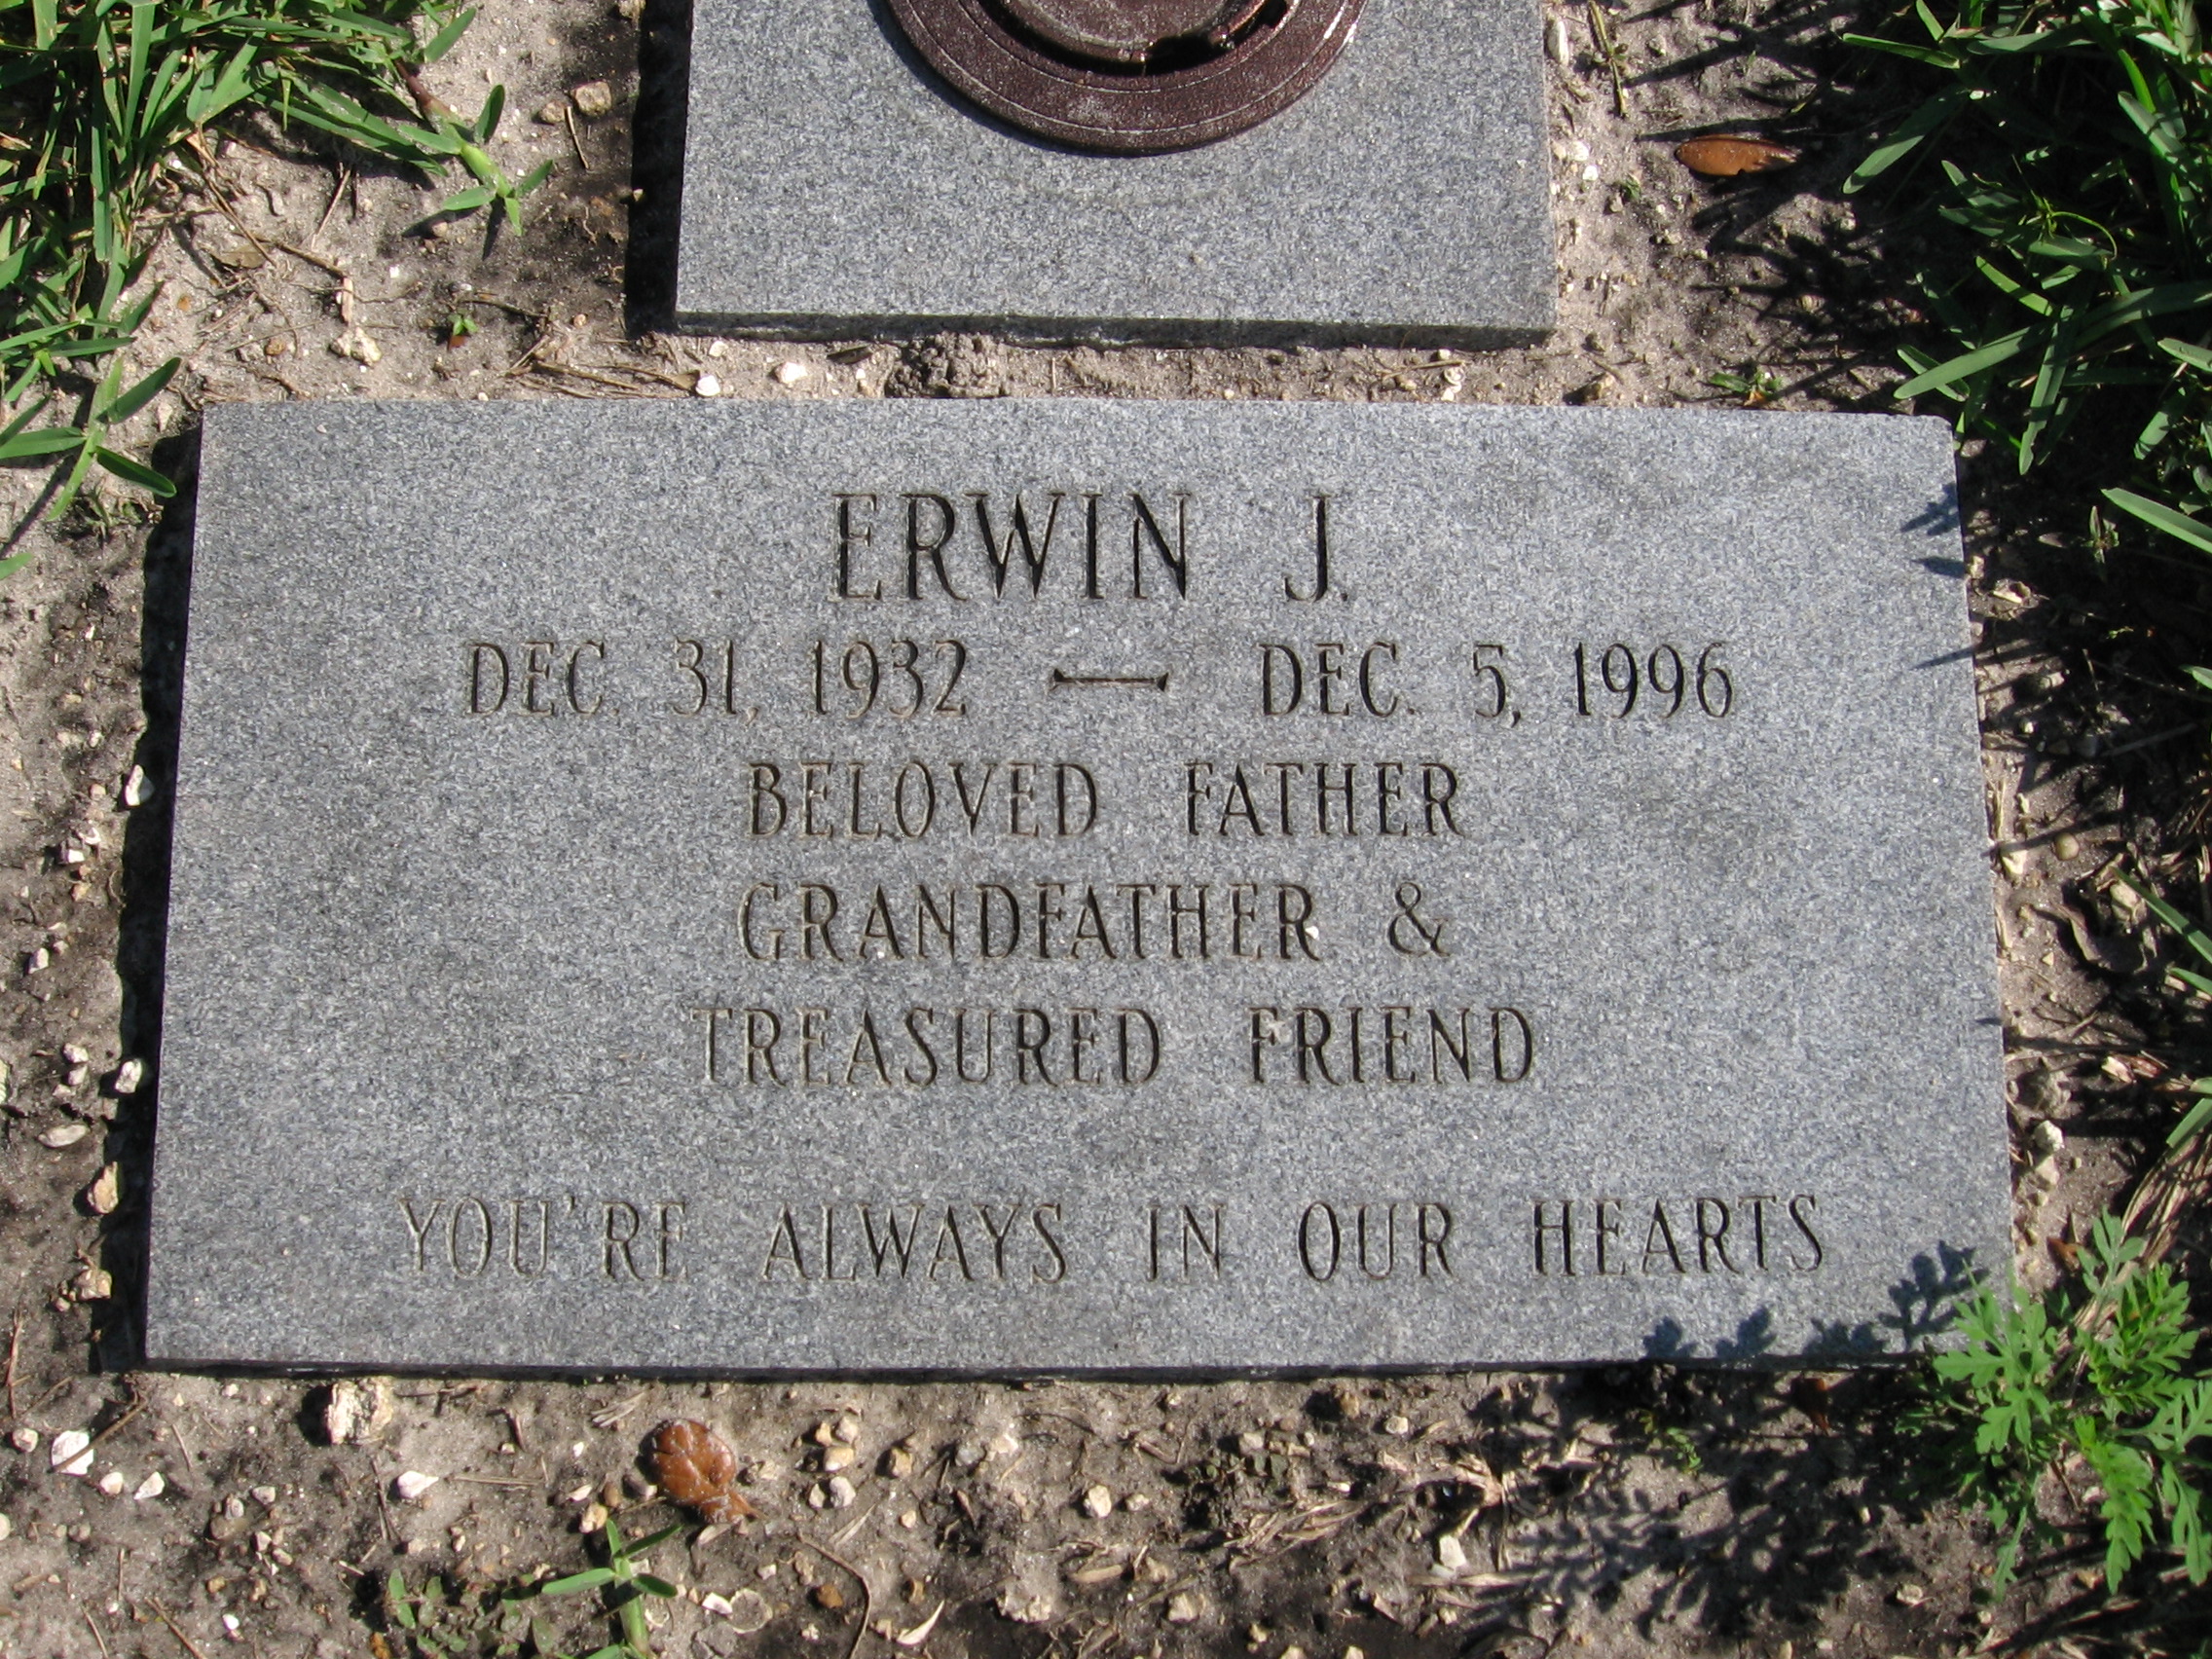 Erwin J Layne